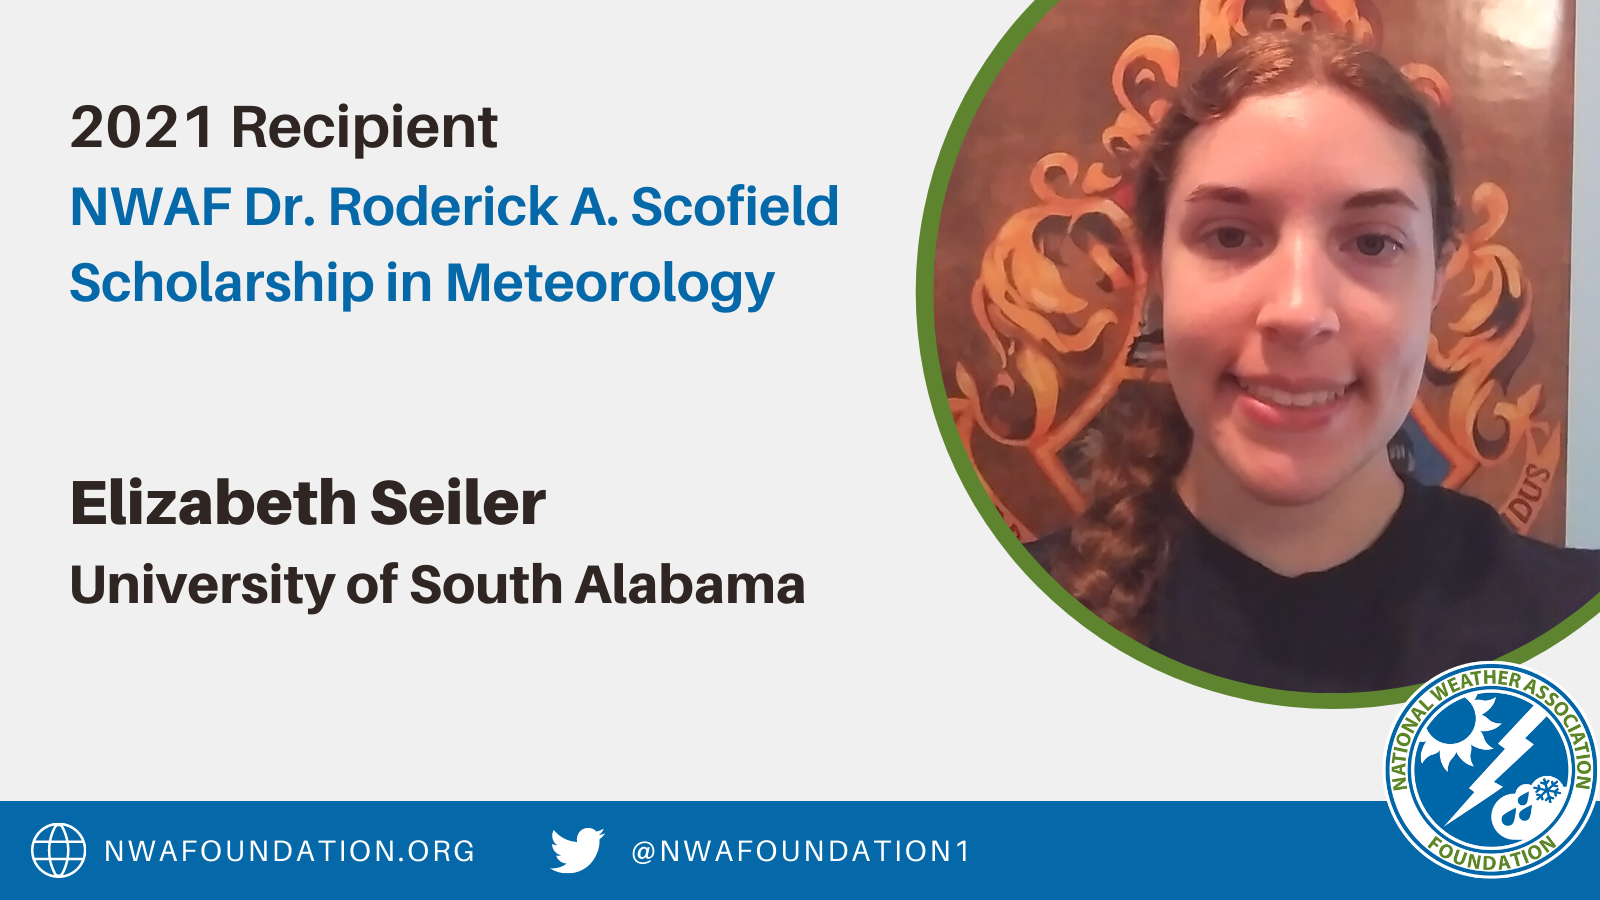 Elizabeth Seiler NWAF Dr. Roderick A. Scofield Scholarship in Meteorology Winner